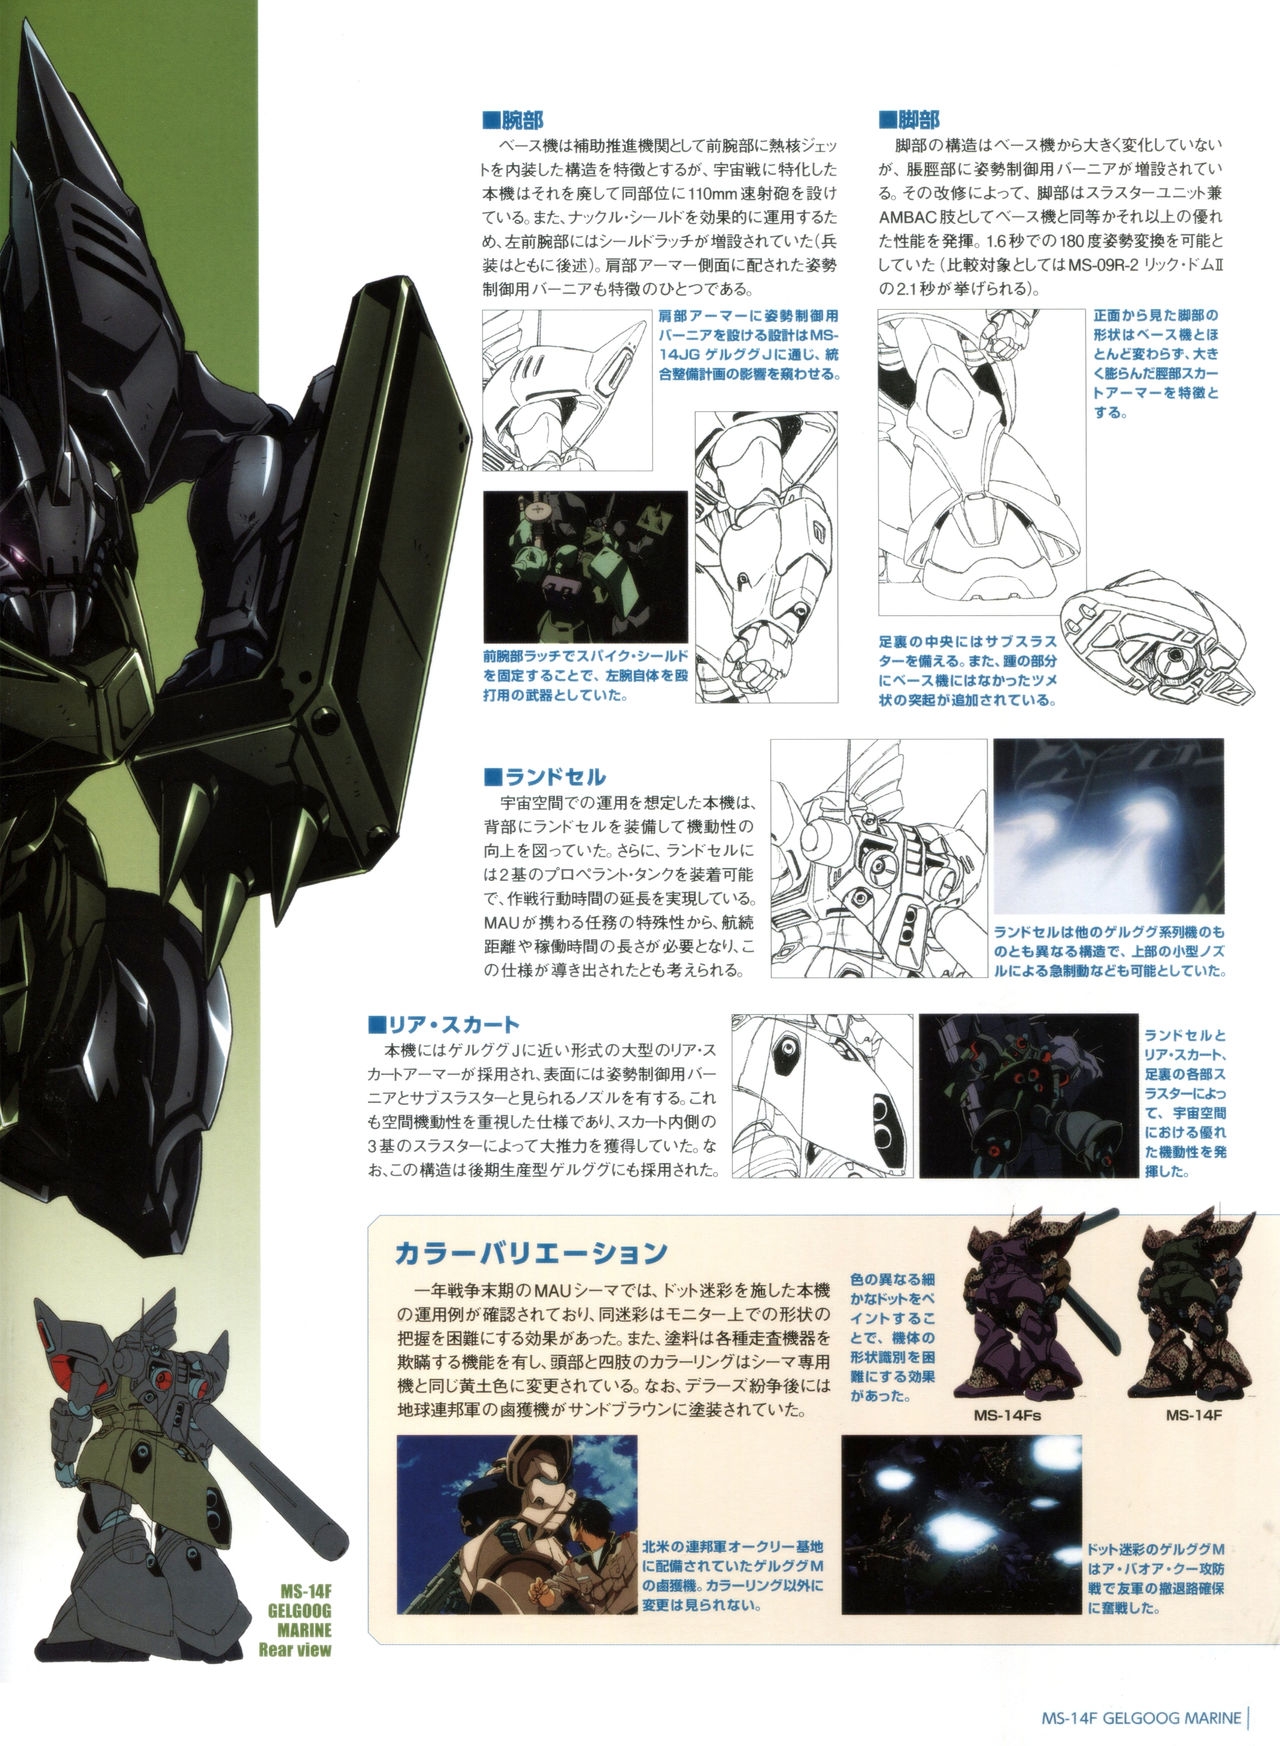 Gundam Mobile Suit Bible 19 8